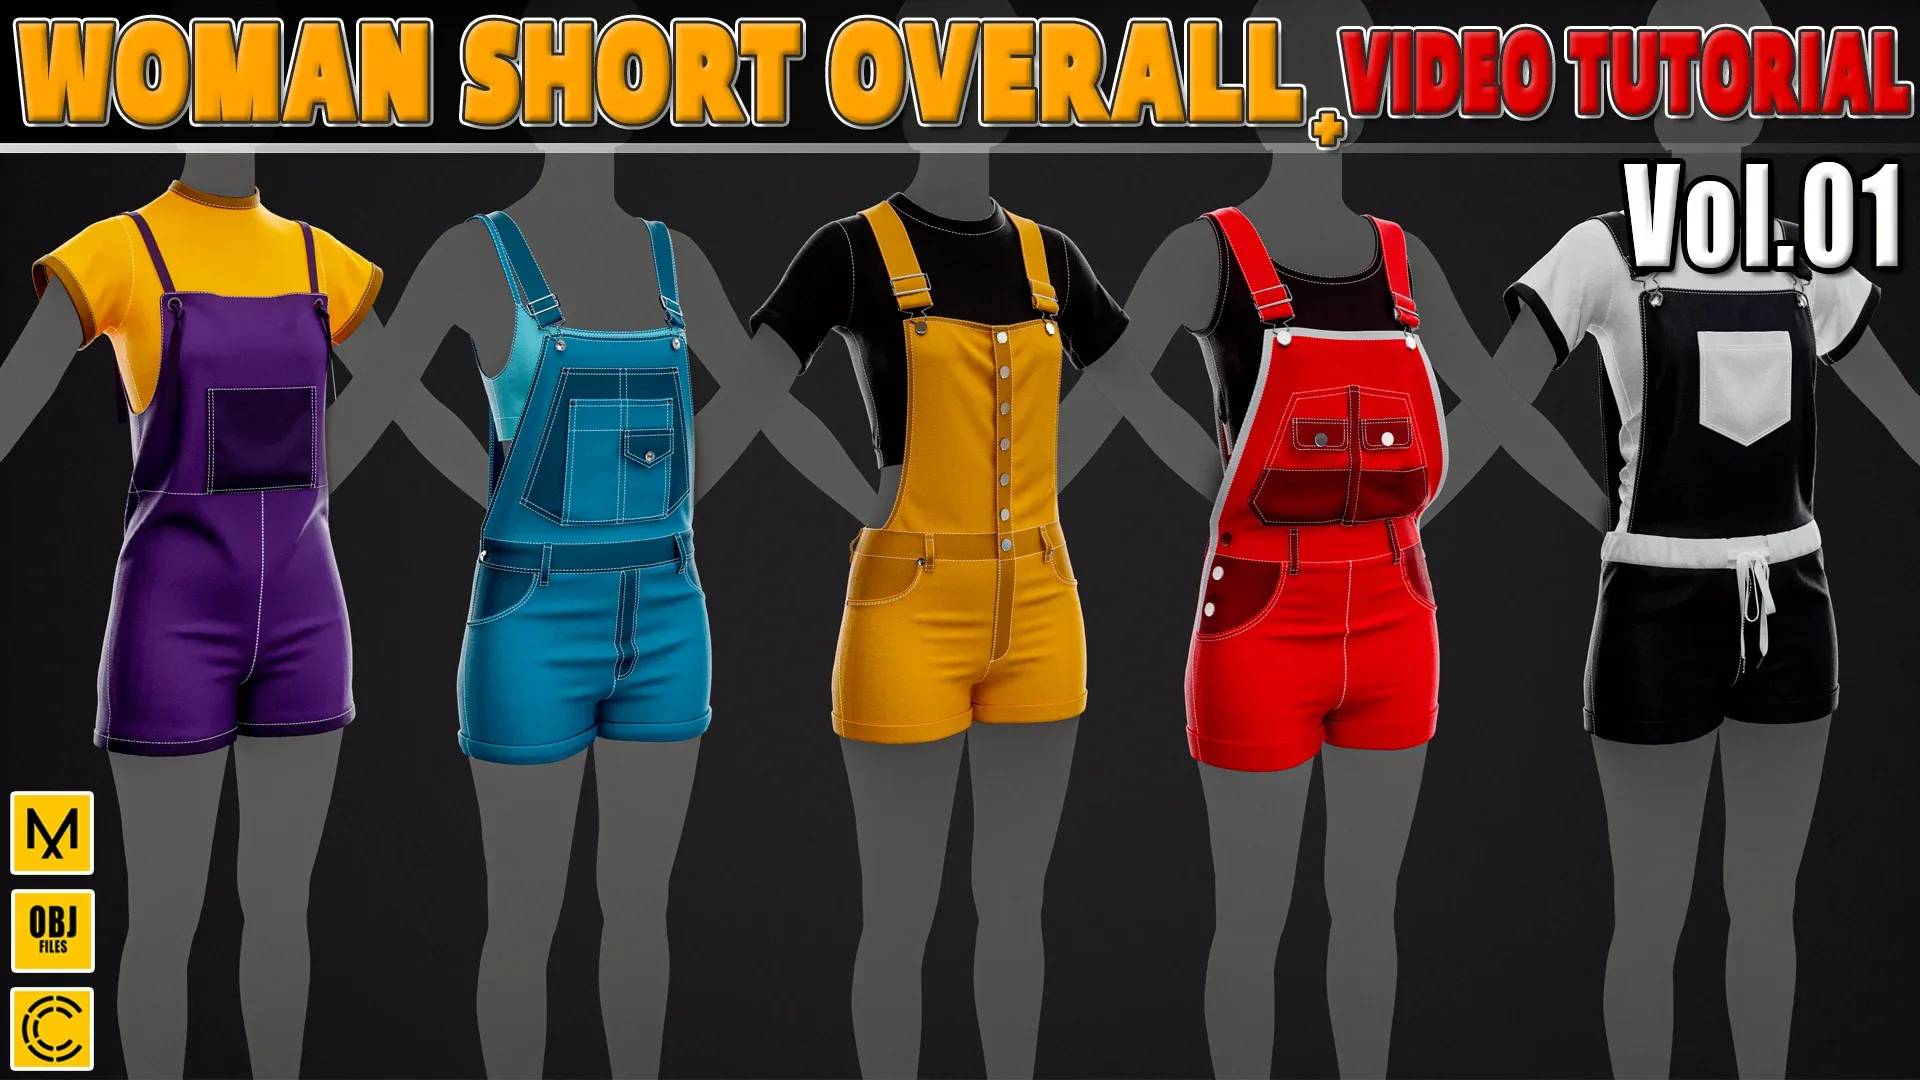 5 in 1 Women's Shorts Overall + Clo3D/Marvelous + Video Tutorial + ZPRJ + OBJ + UV+ Texture Vol.01